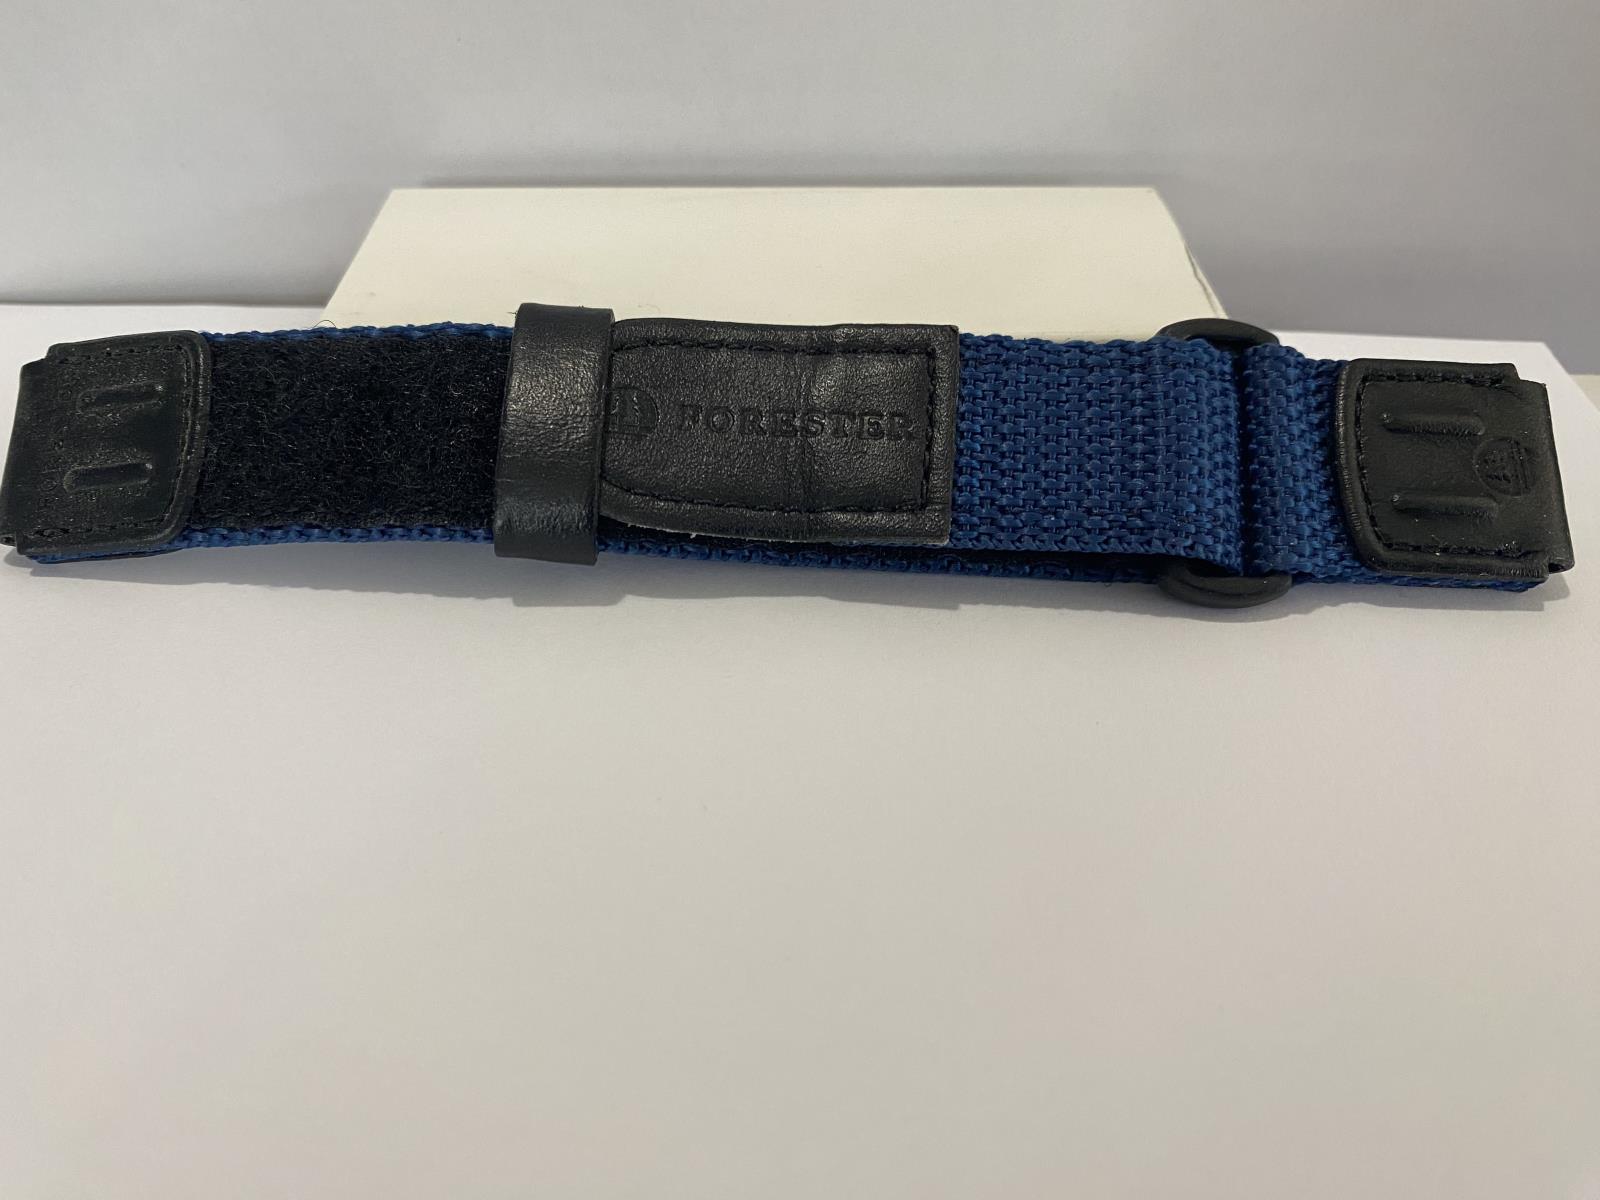 Casio Watchband Forester Nylon Grip Blue/Black Strap. 19mm Band